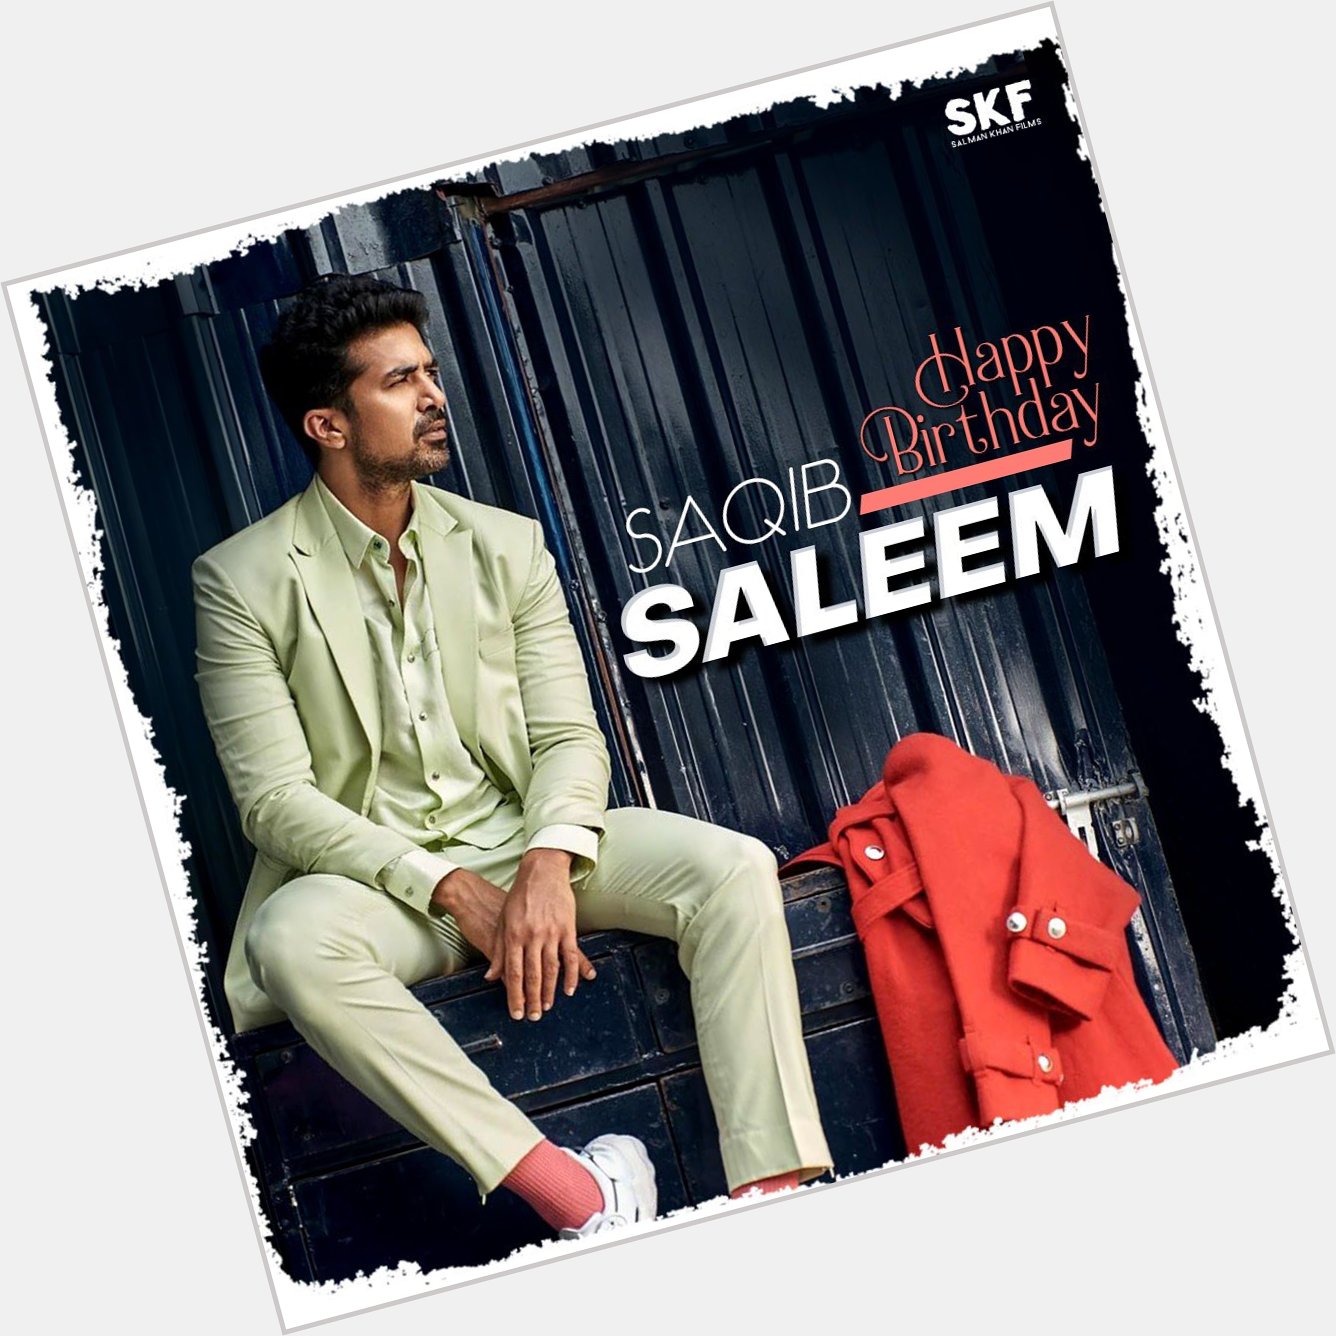 Wishing a very Happy Birthday to Saqib Saleem. Keep shining! 